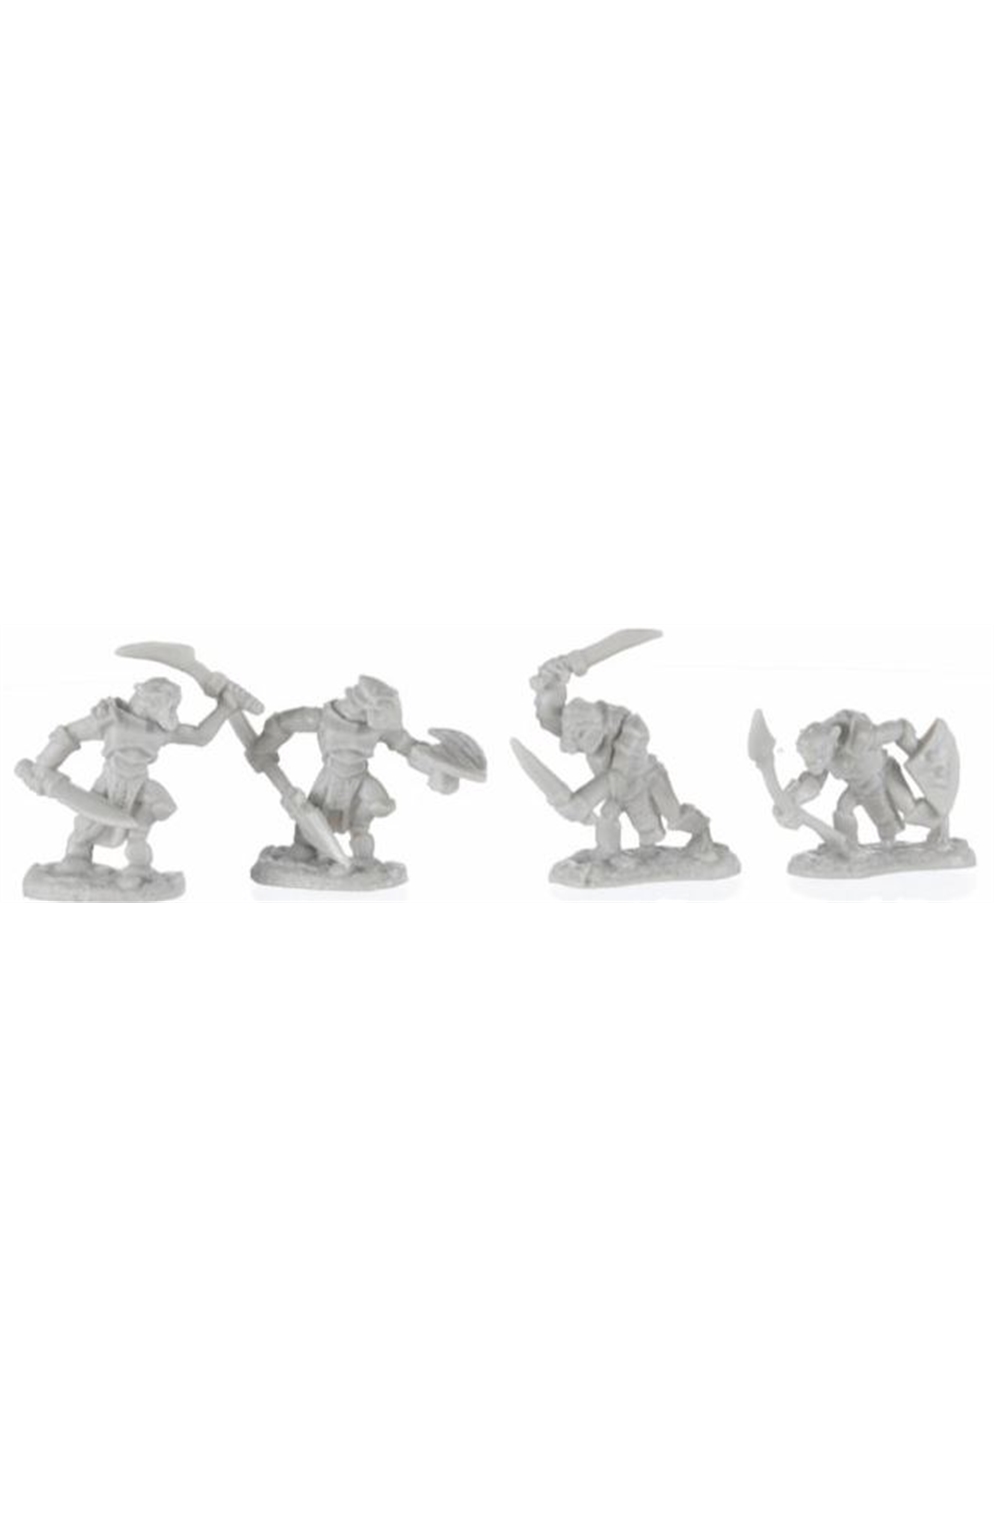 Bones: Armored Goblin Warriors (4)